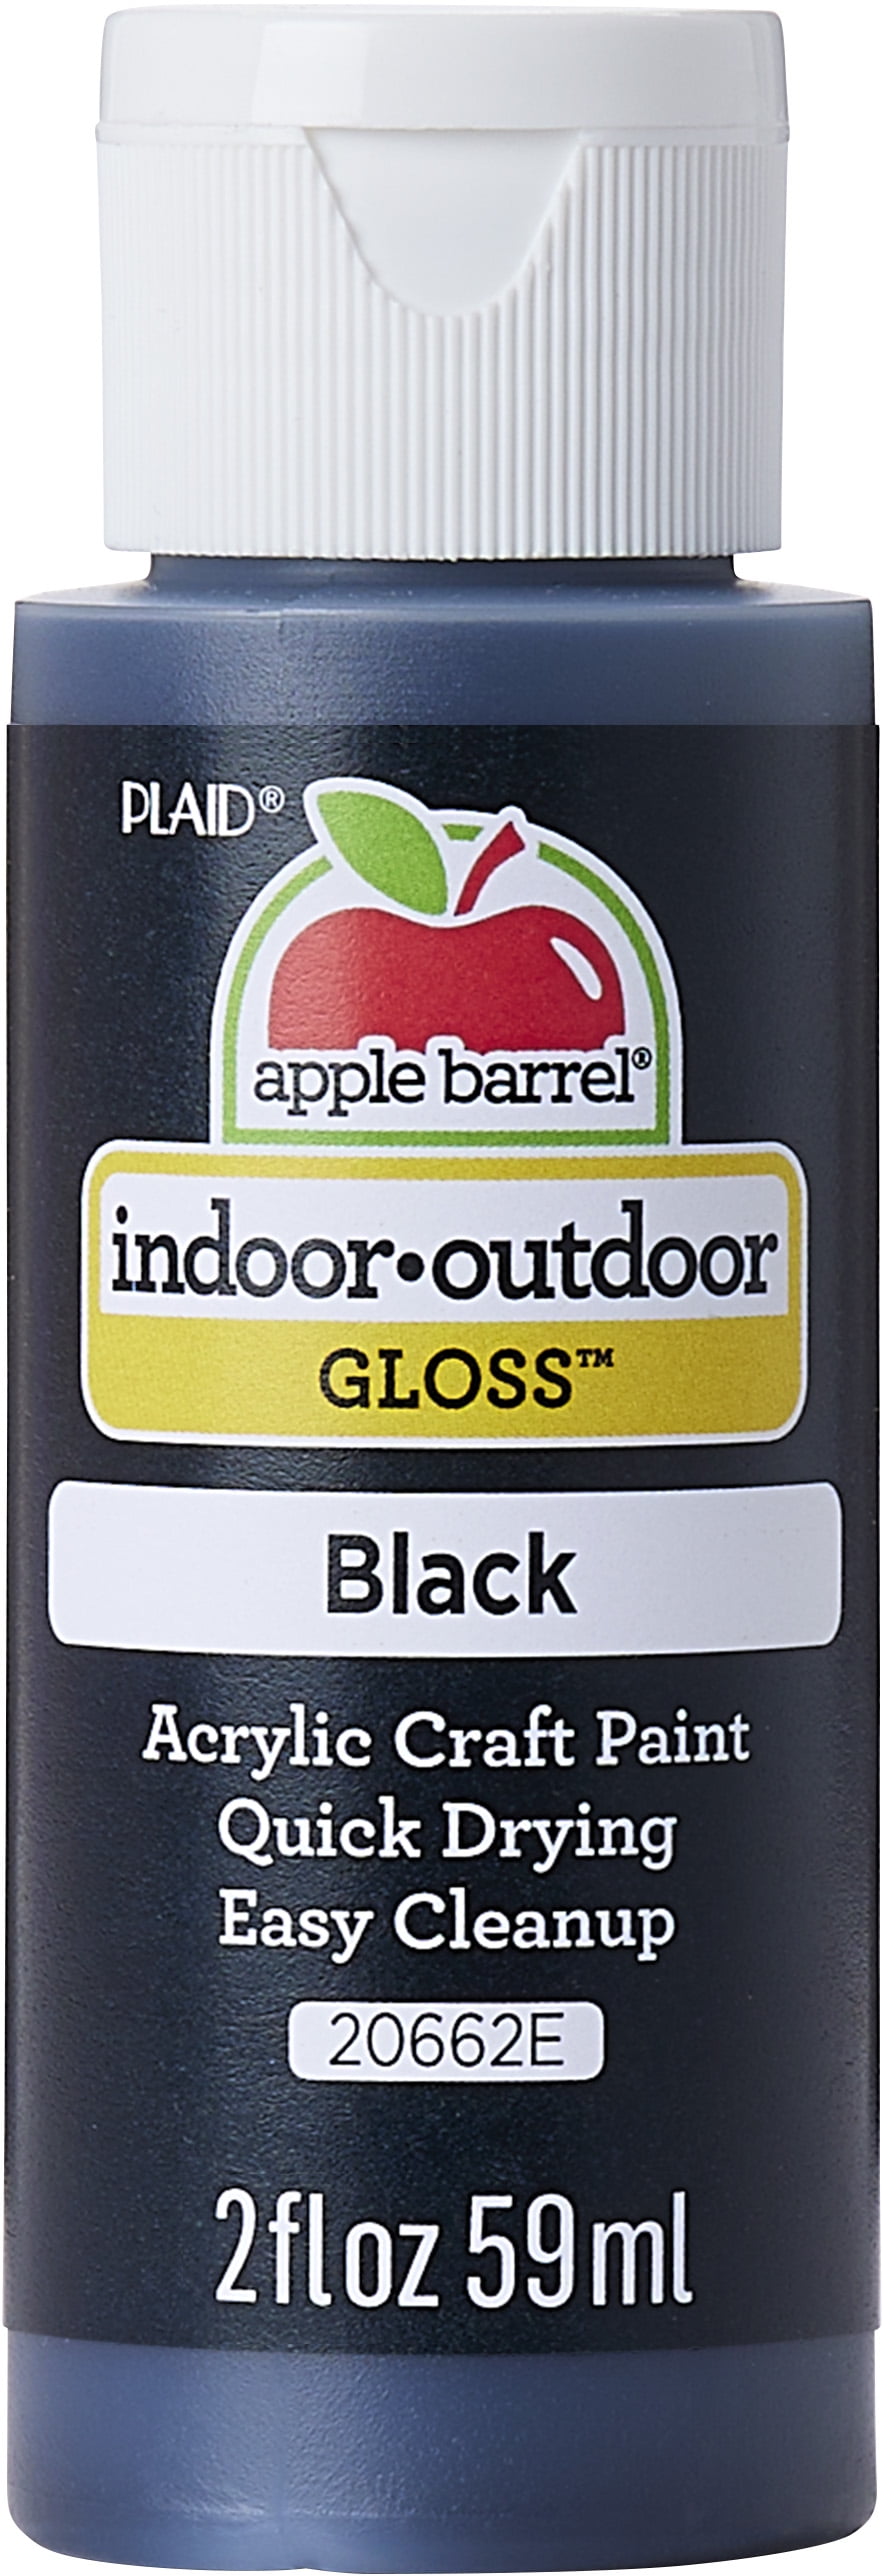 Apple Barrel Acrylic Craft Paint, Gloss Finish, Black, 2 fl oz